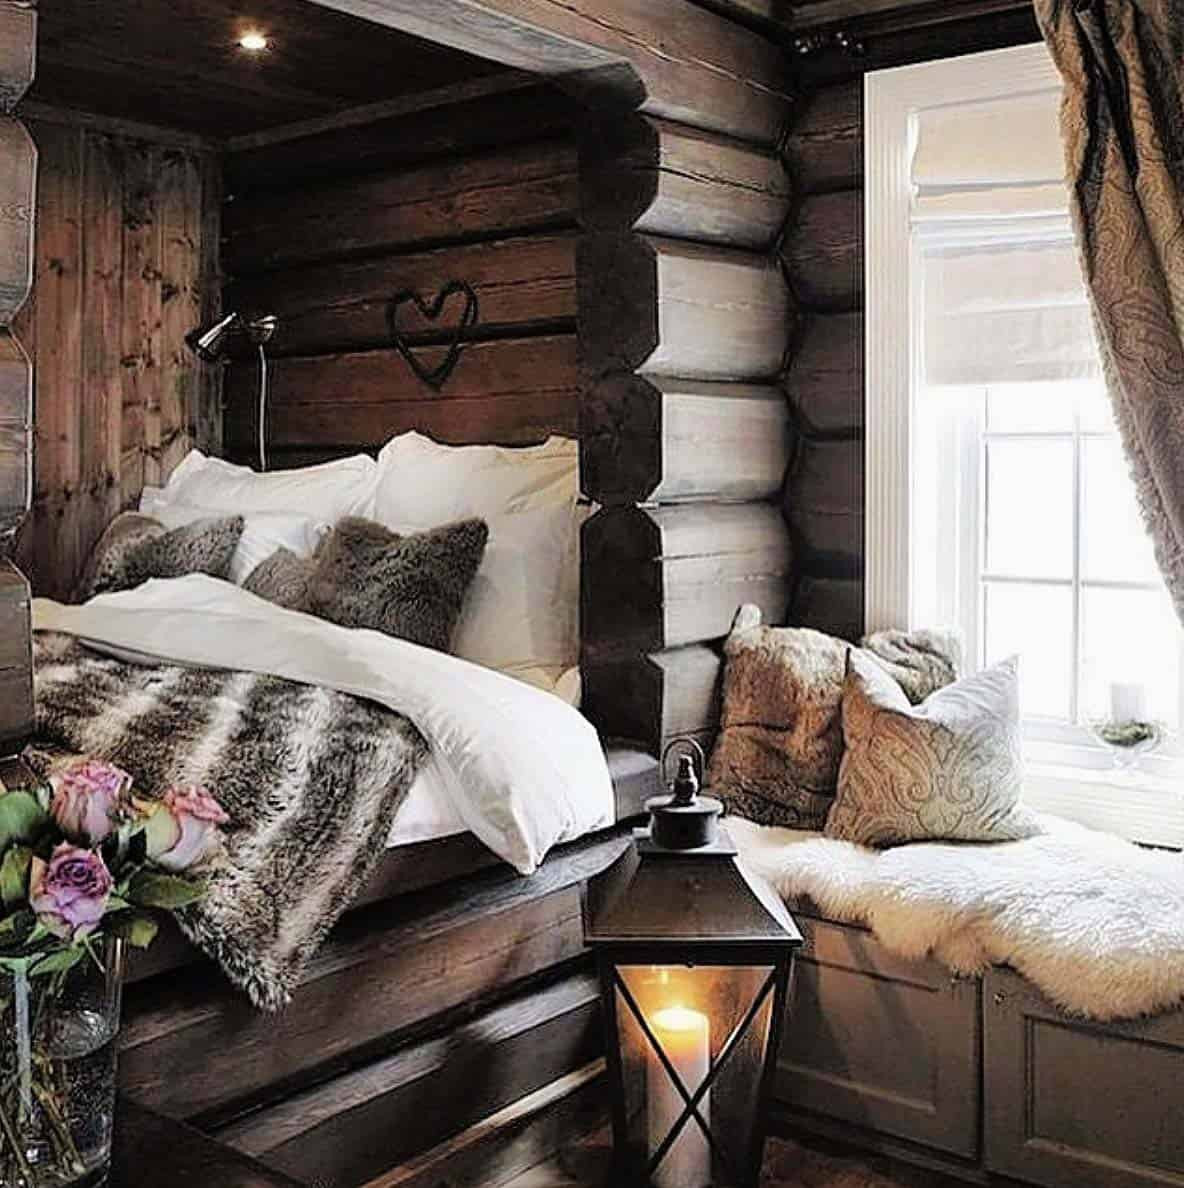 Winter Bedroom Decor
 33 Ultra cozy bedroom decorating ideas for winter warmth